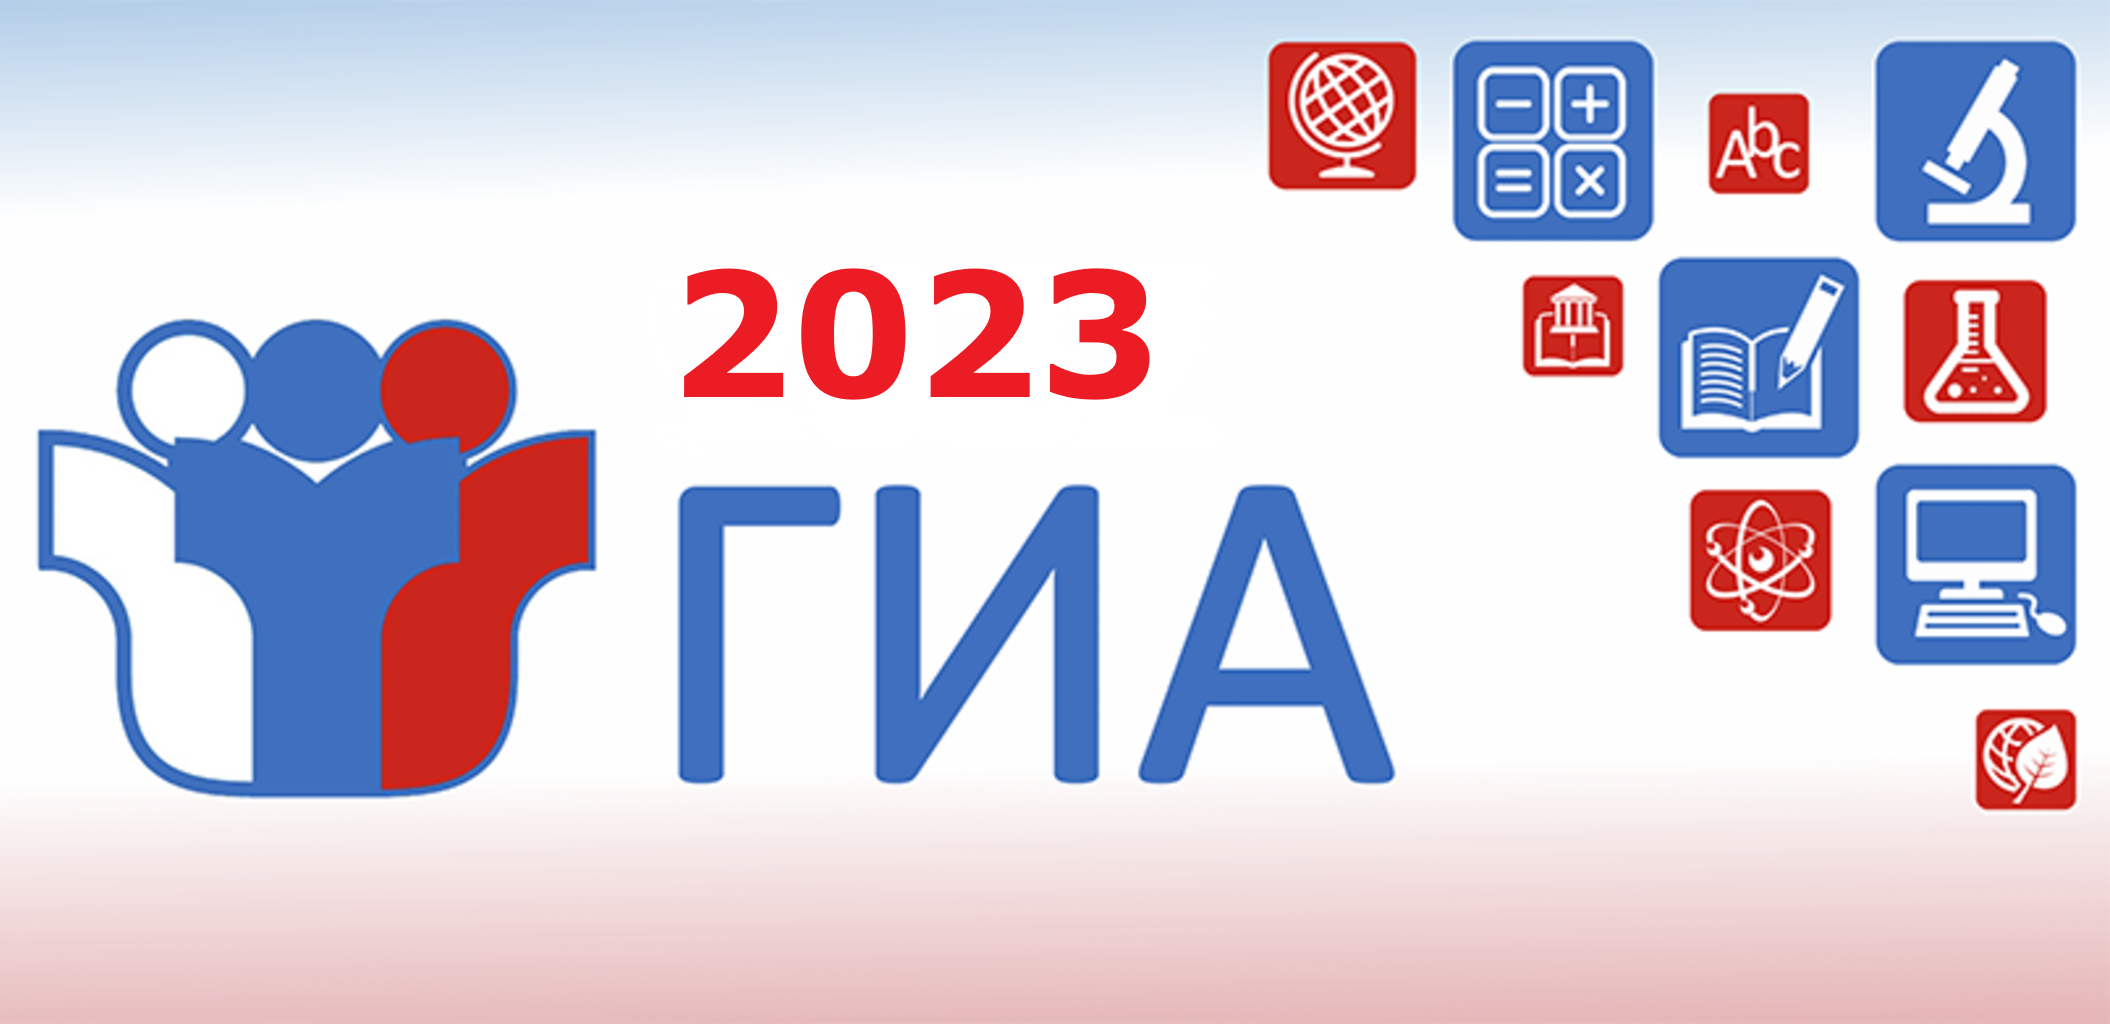 Https edu 2024 rustest. ГИА 2023. Эмблема ГИА 2023. ГИА логотип. Баннер ГИА 2023.